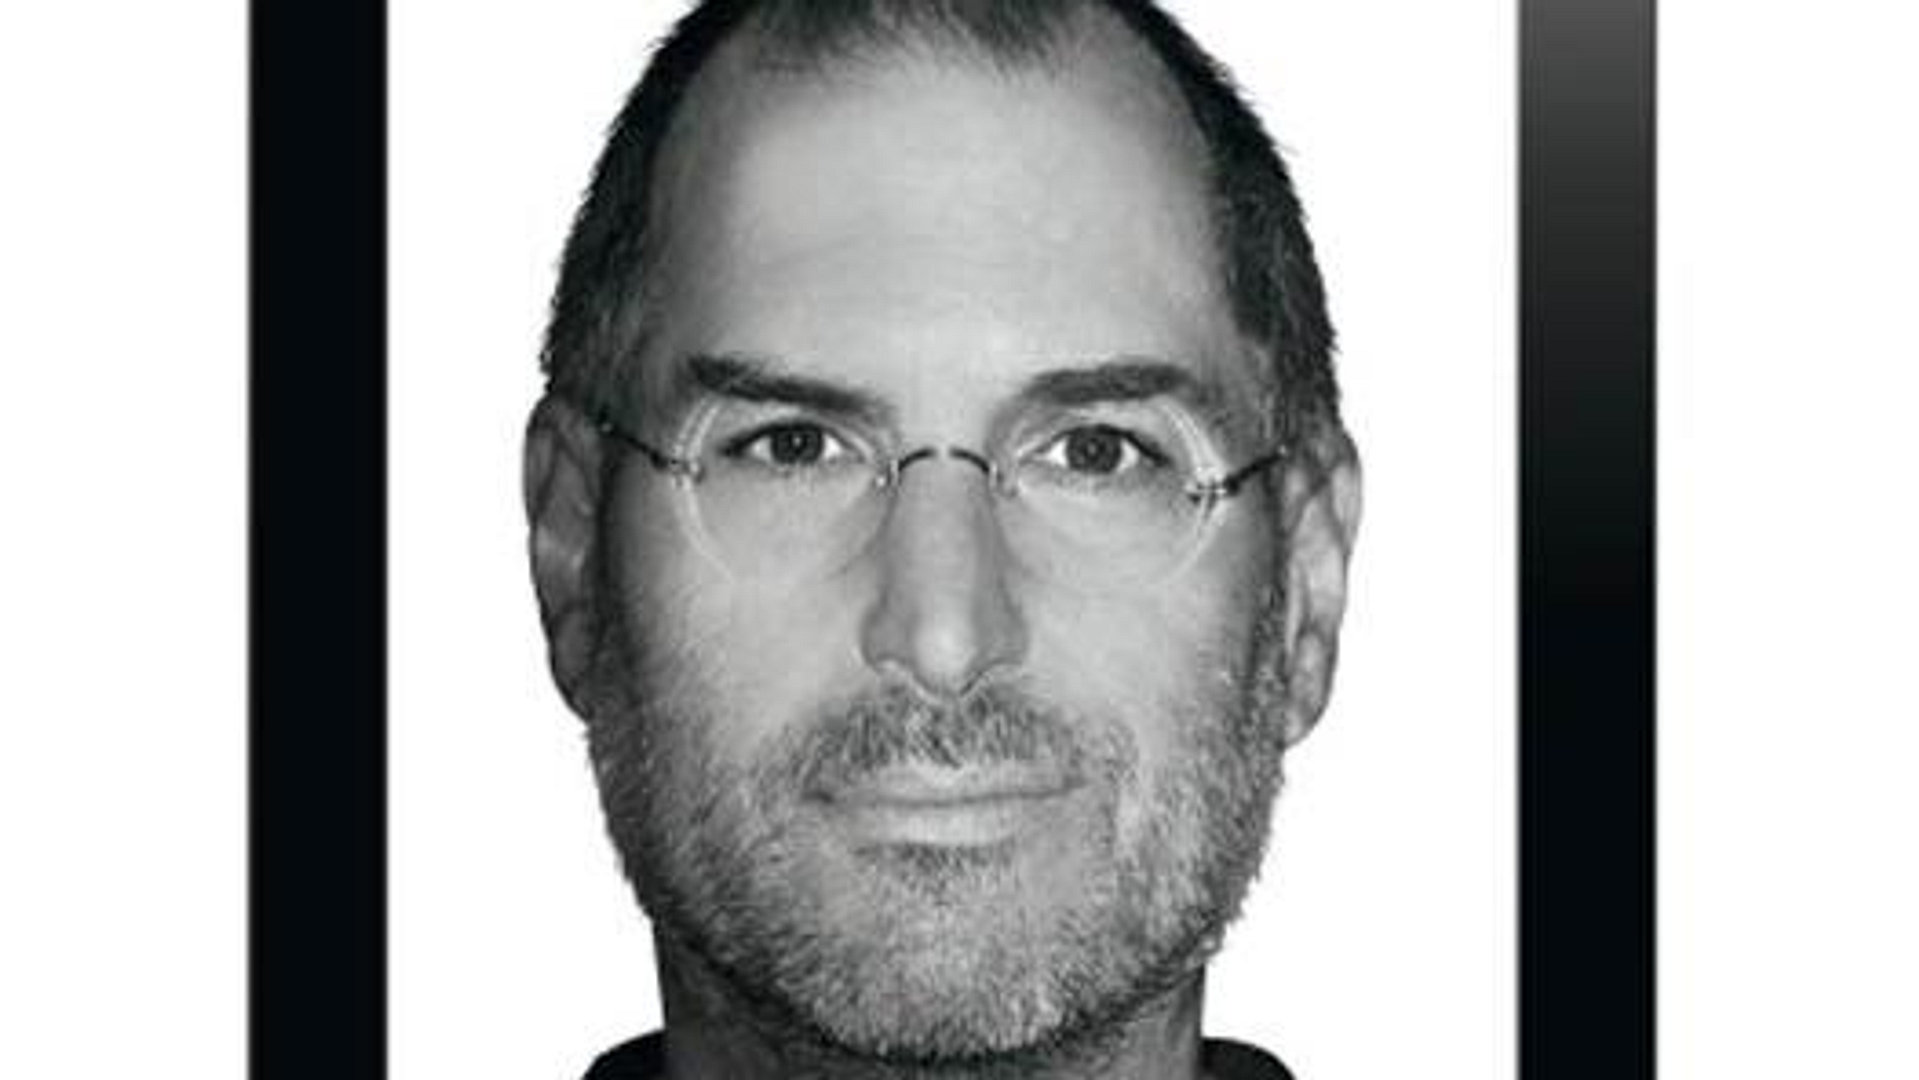 Steve Jobs - Visionary Genius